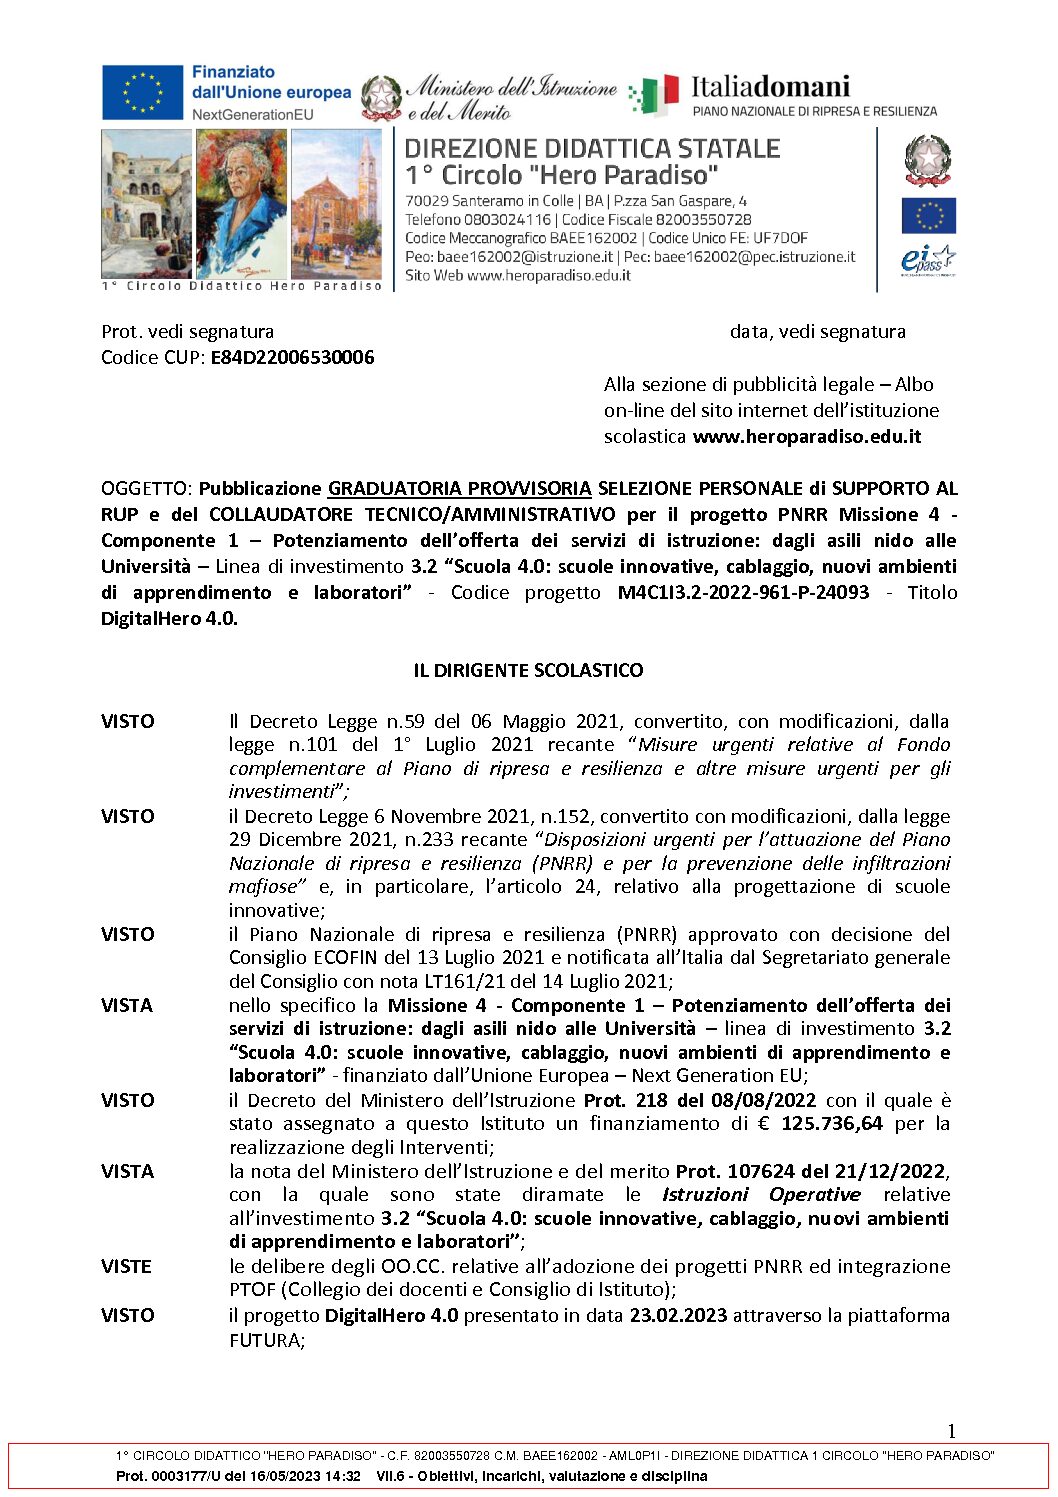 5._Graduatoria_provvisoria_PNRR_4.0.pdf.pades